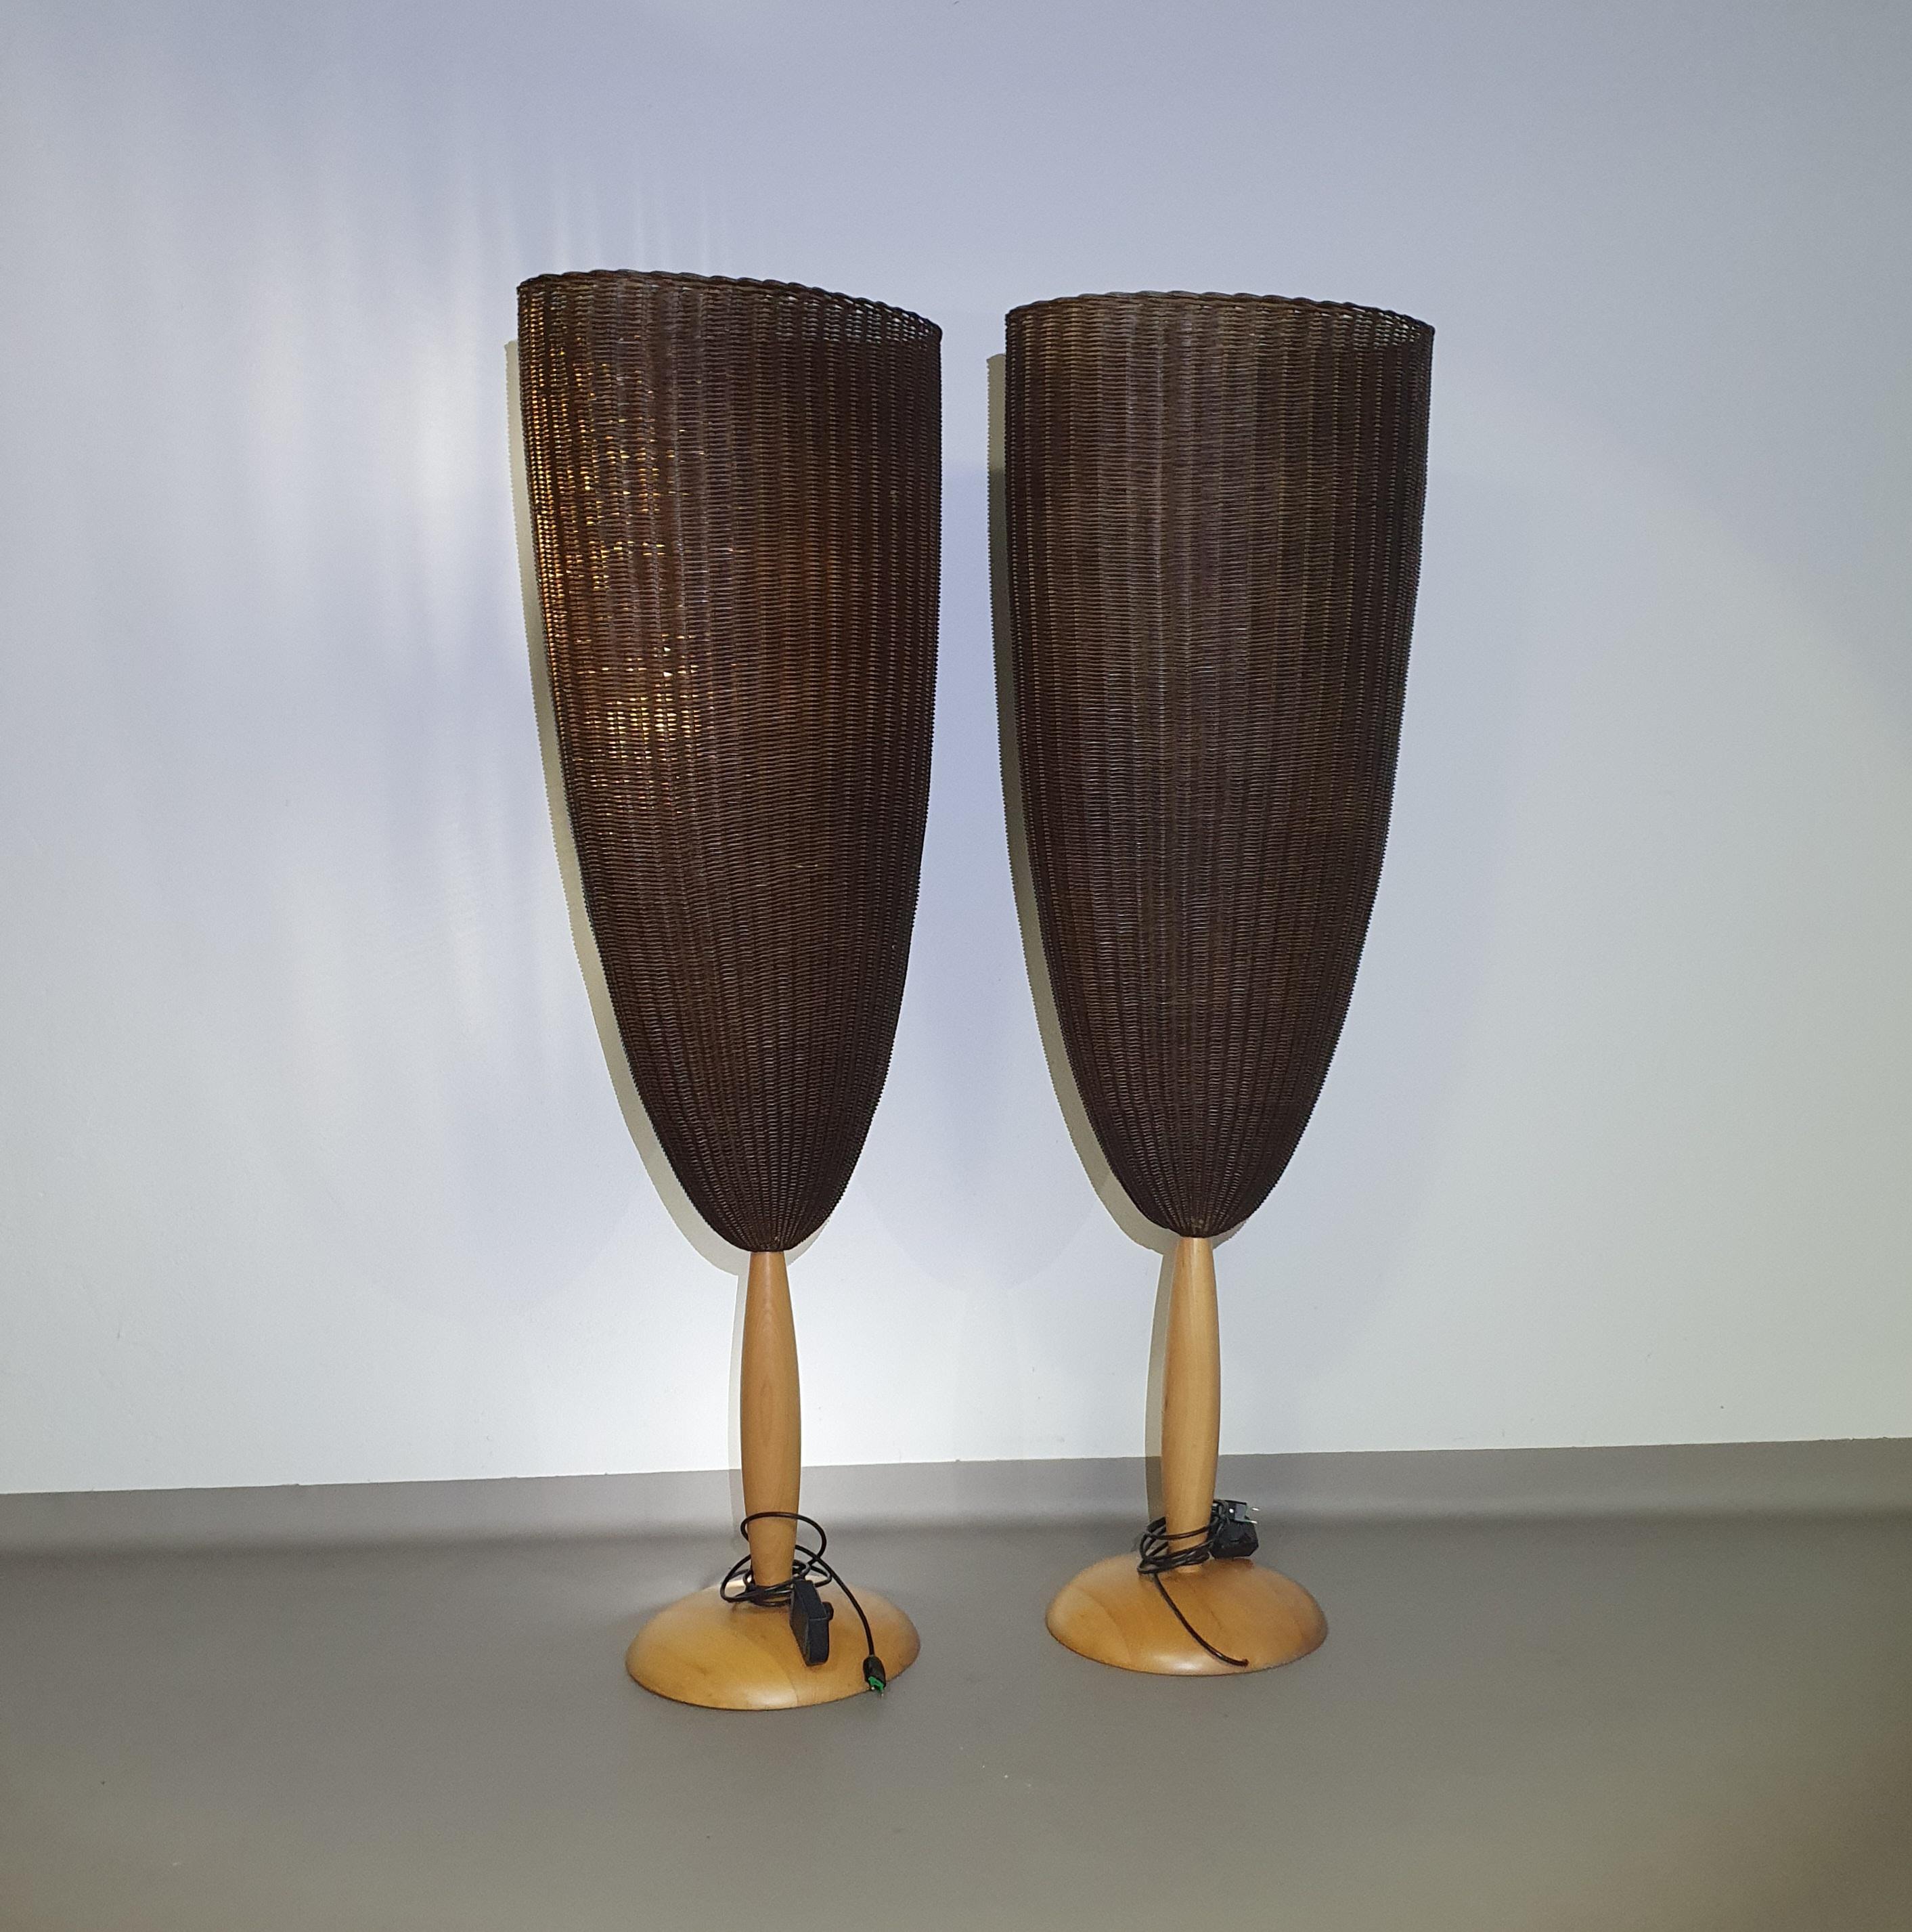 2 x Marco Agnoli for Pierantonio Bonacina XL / Flûte Floor Lamp in Cane and Wood In Good Condition For Sale In WEERT, NL